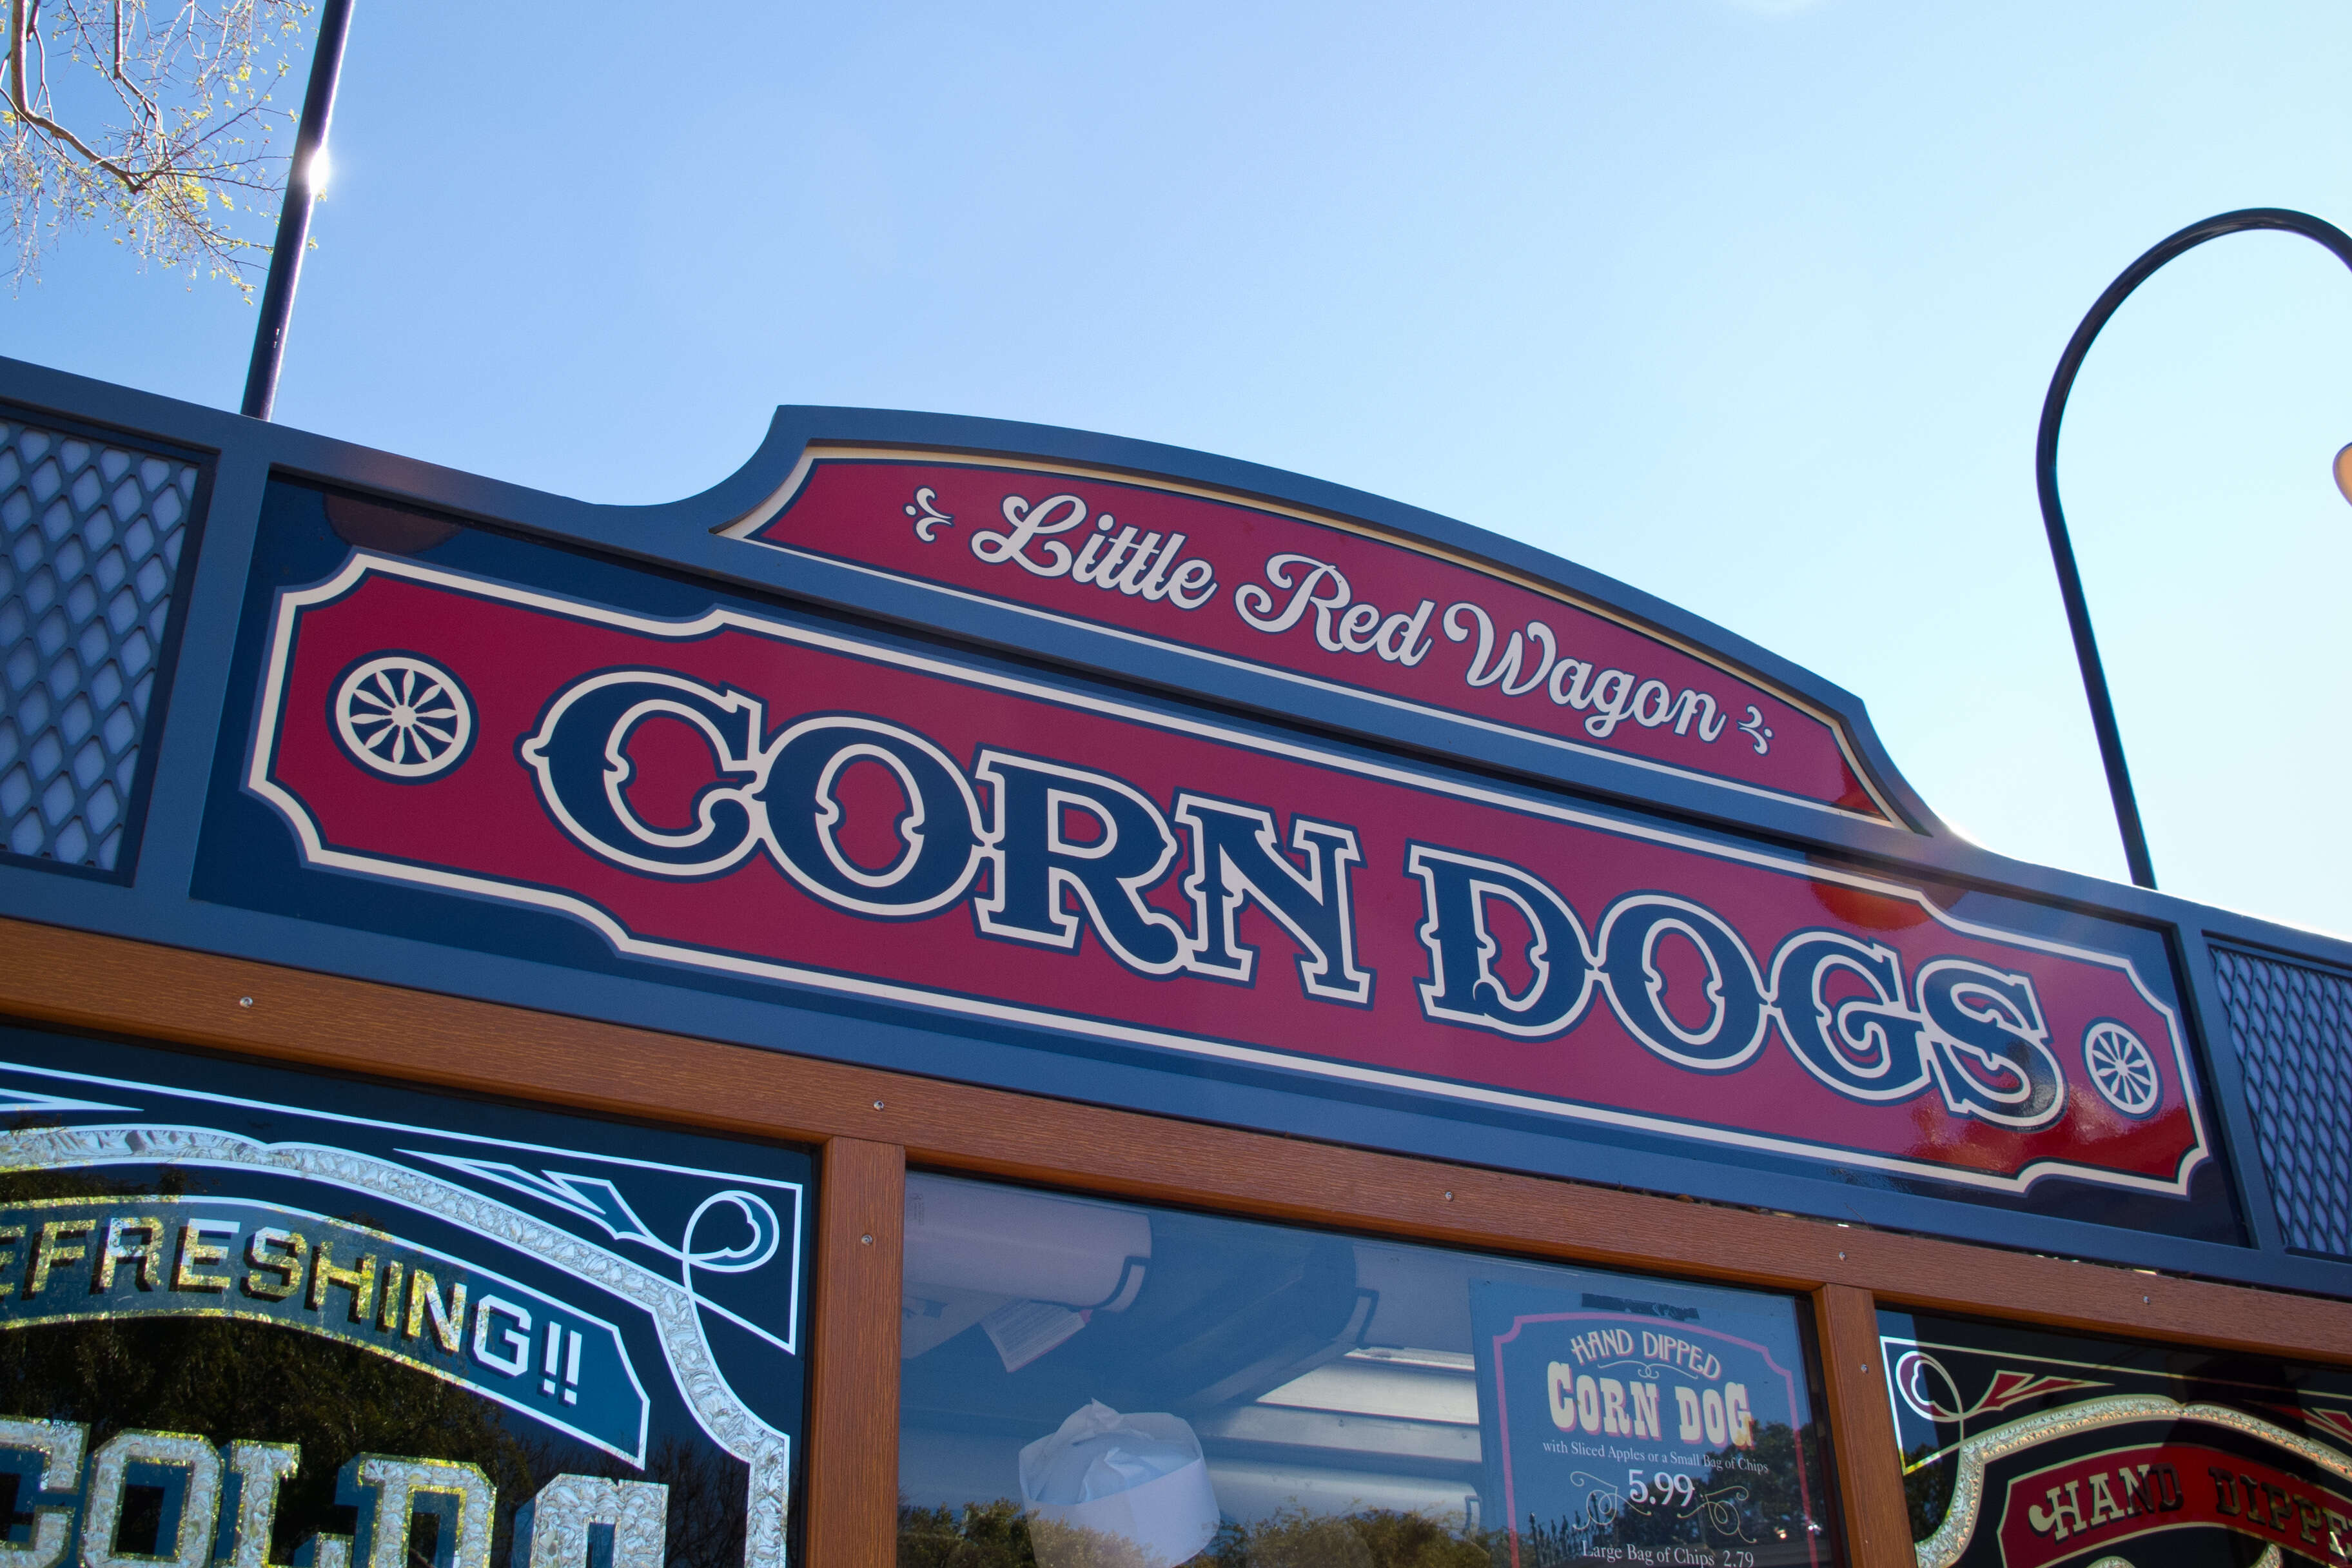 Little Red Wagon, Disneyland corn dogs